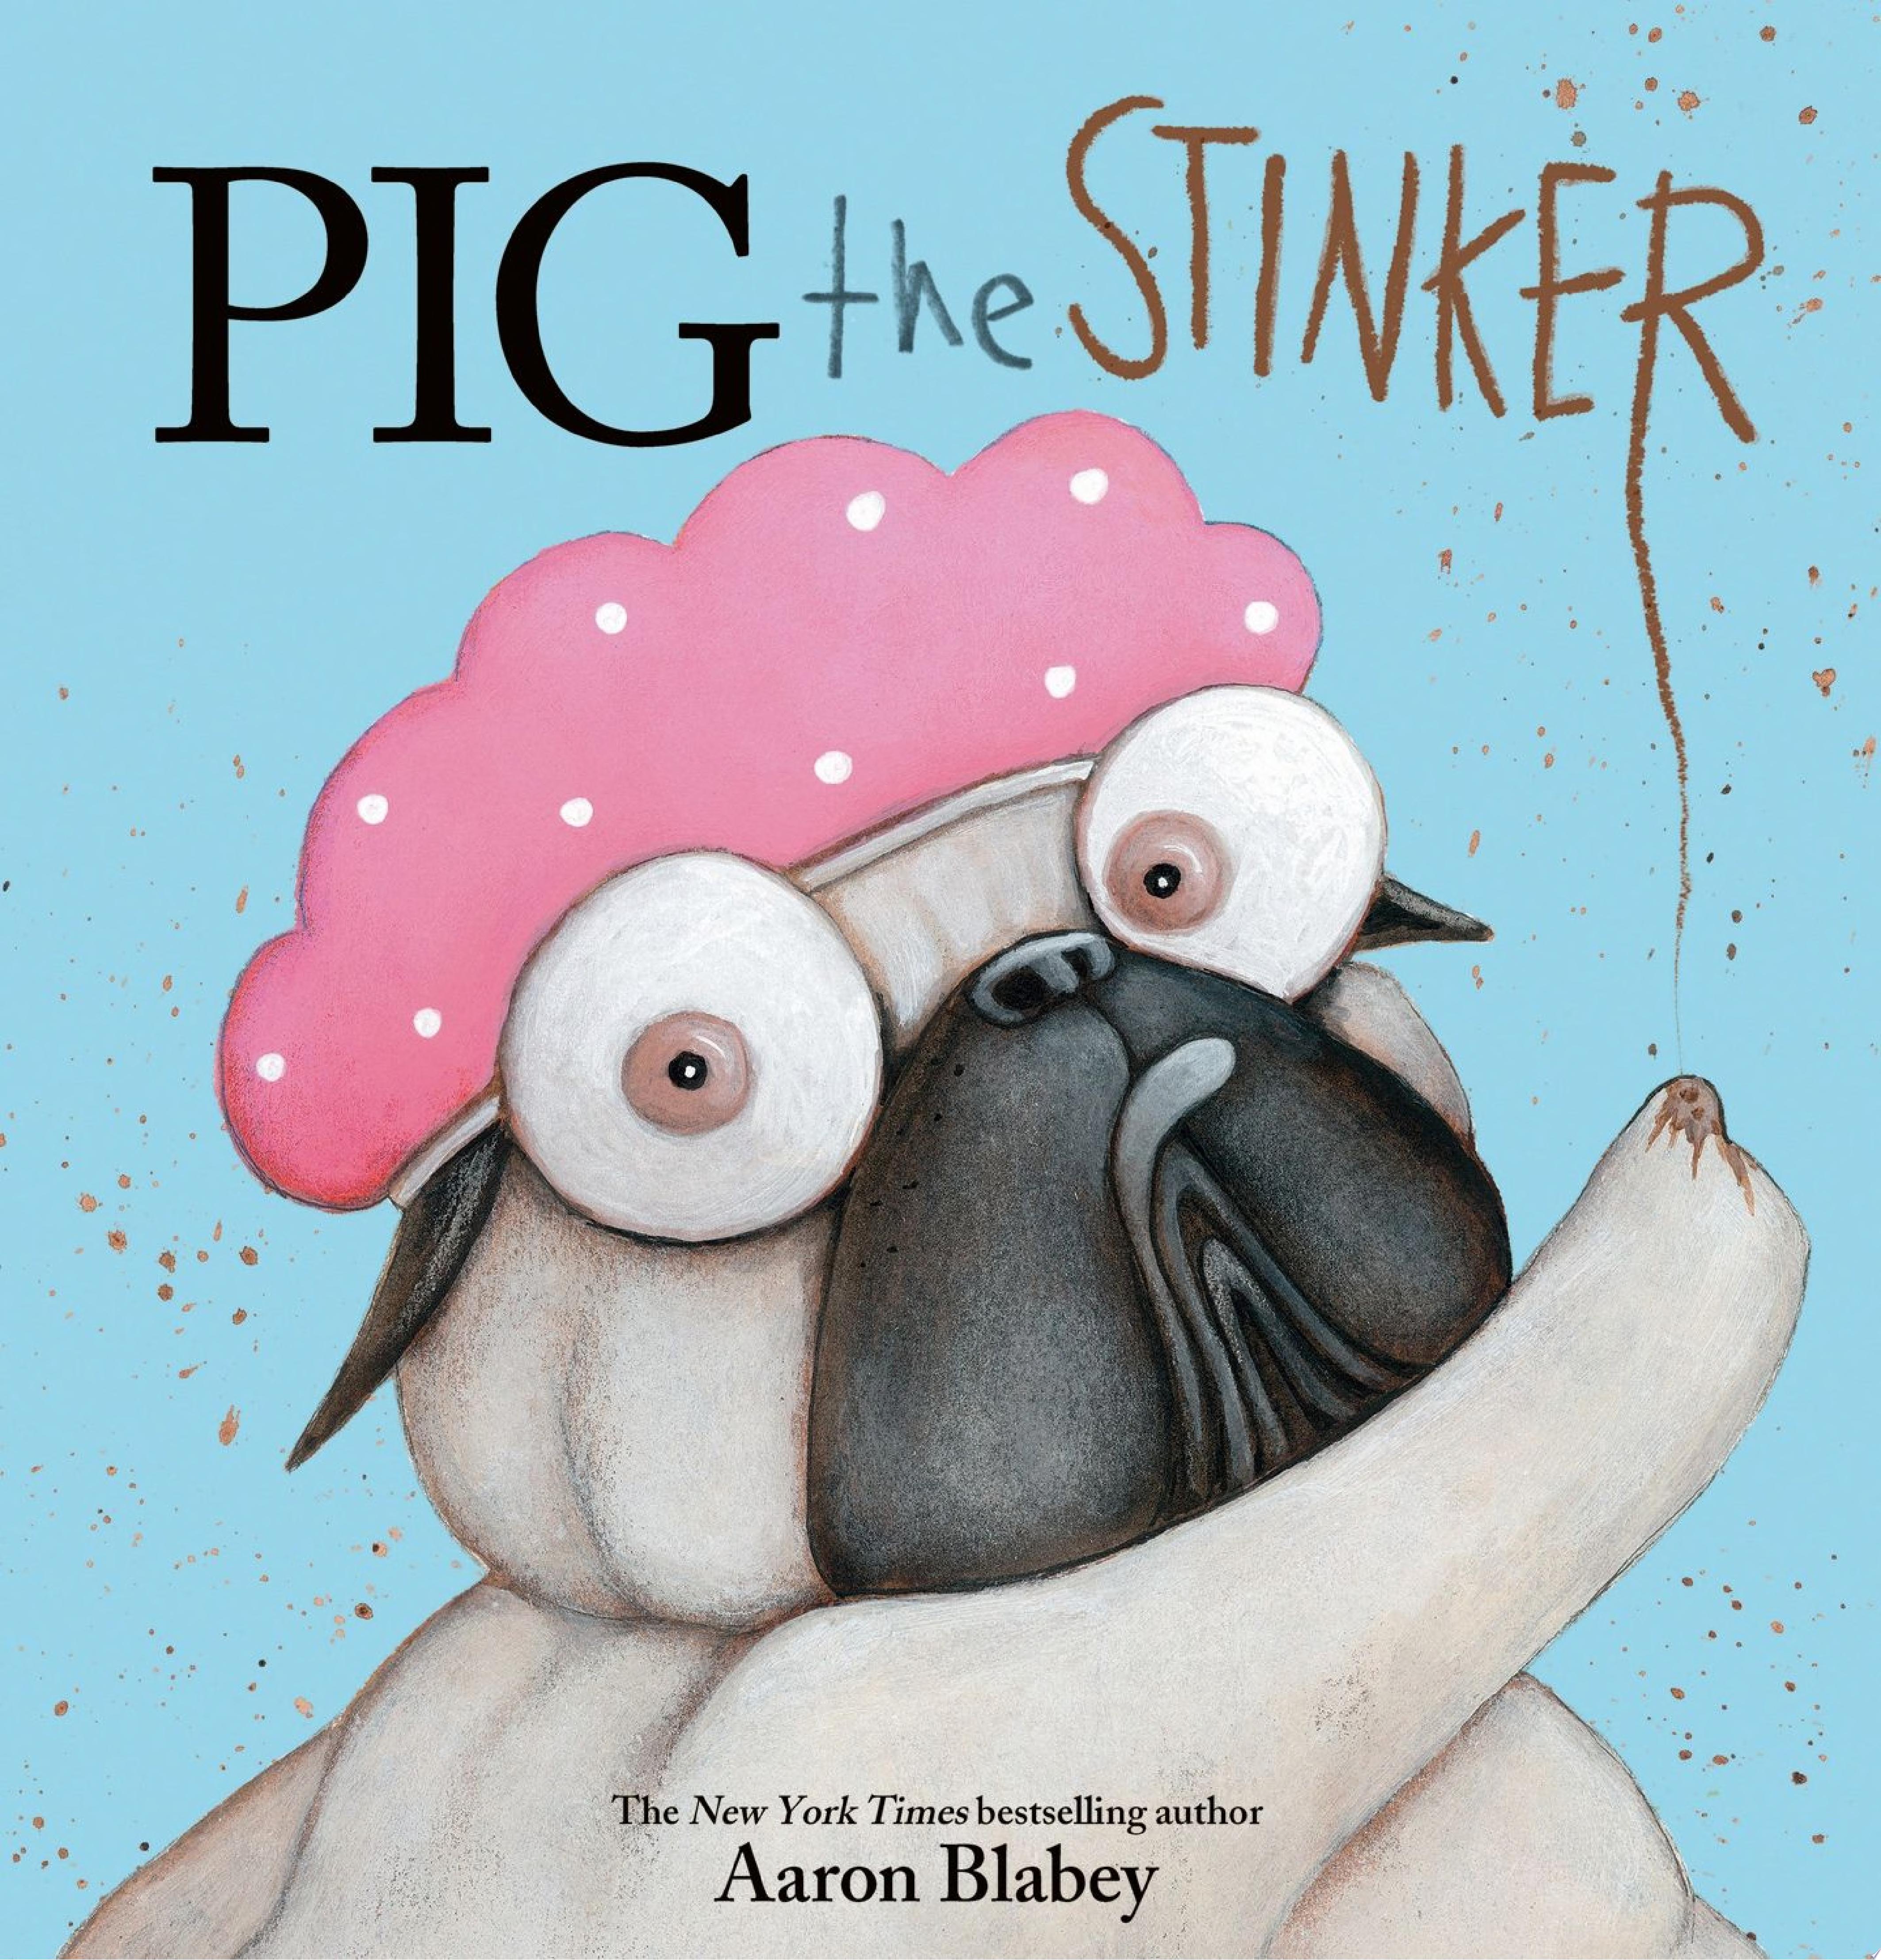 Image for "Pig the Stinker (Pig the Pug)"